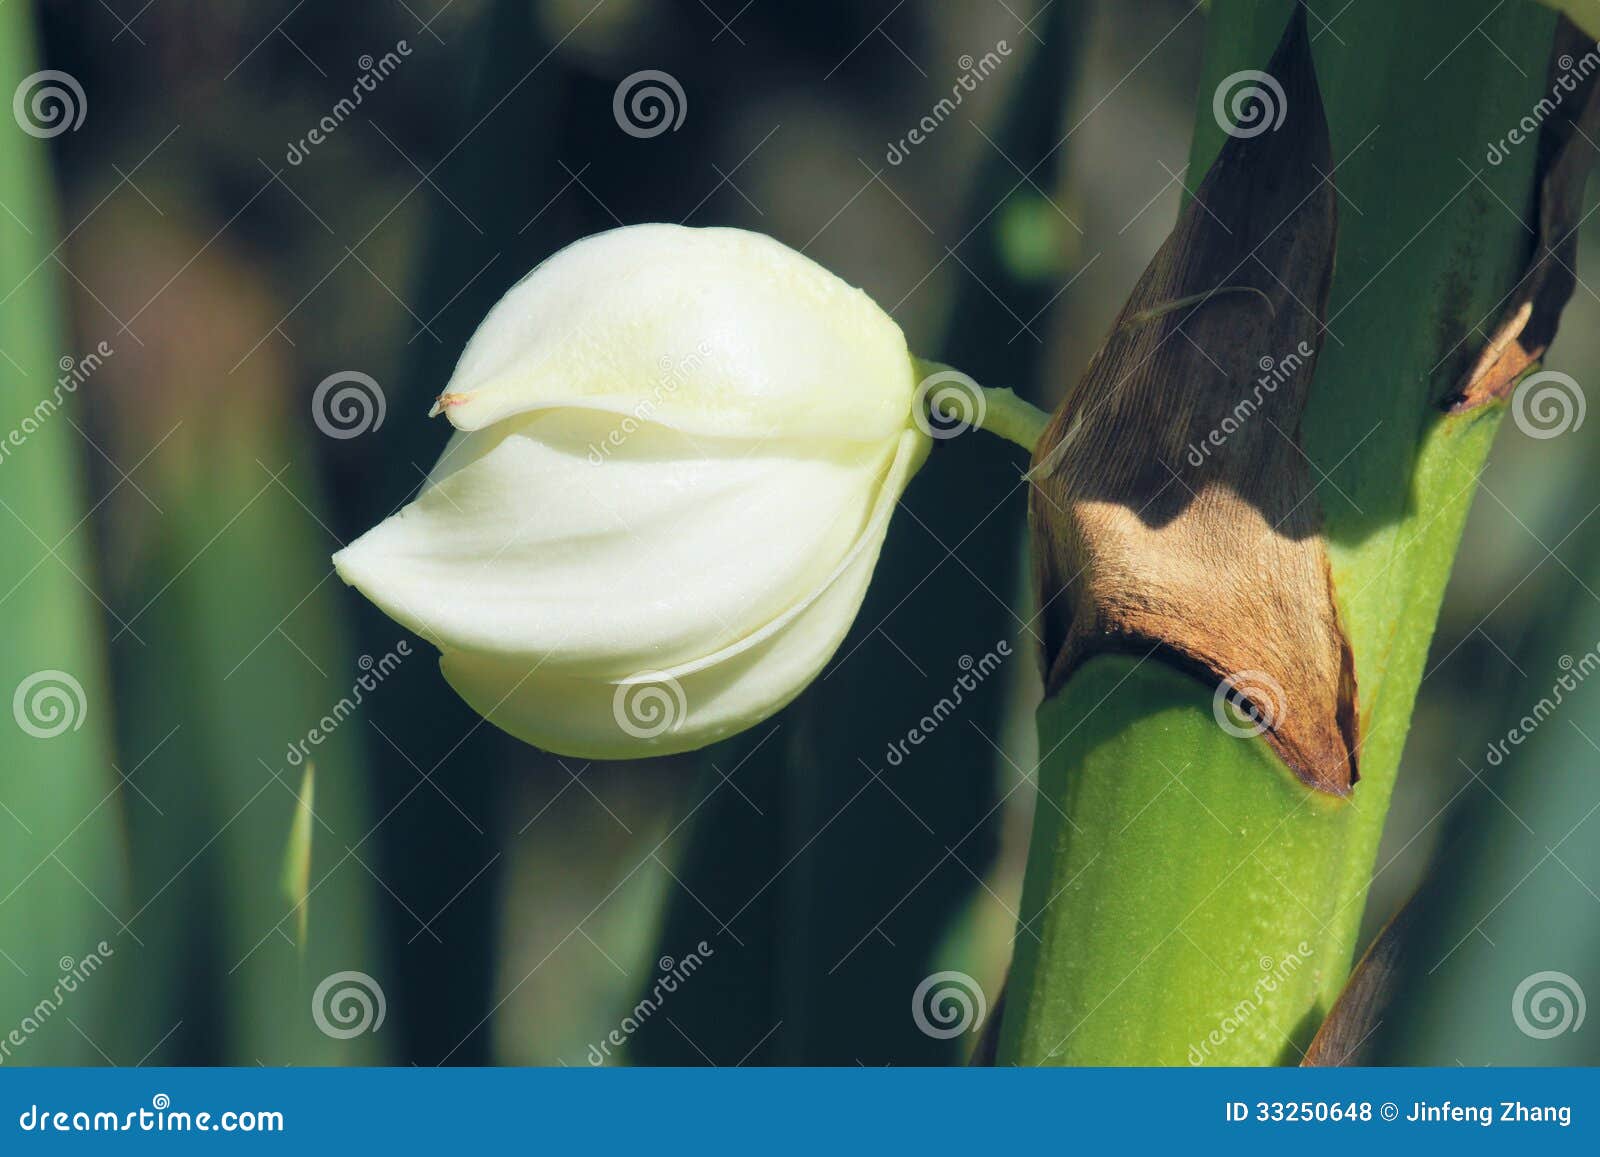 agave flower